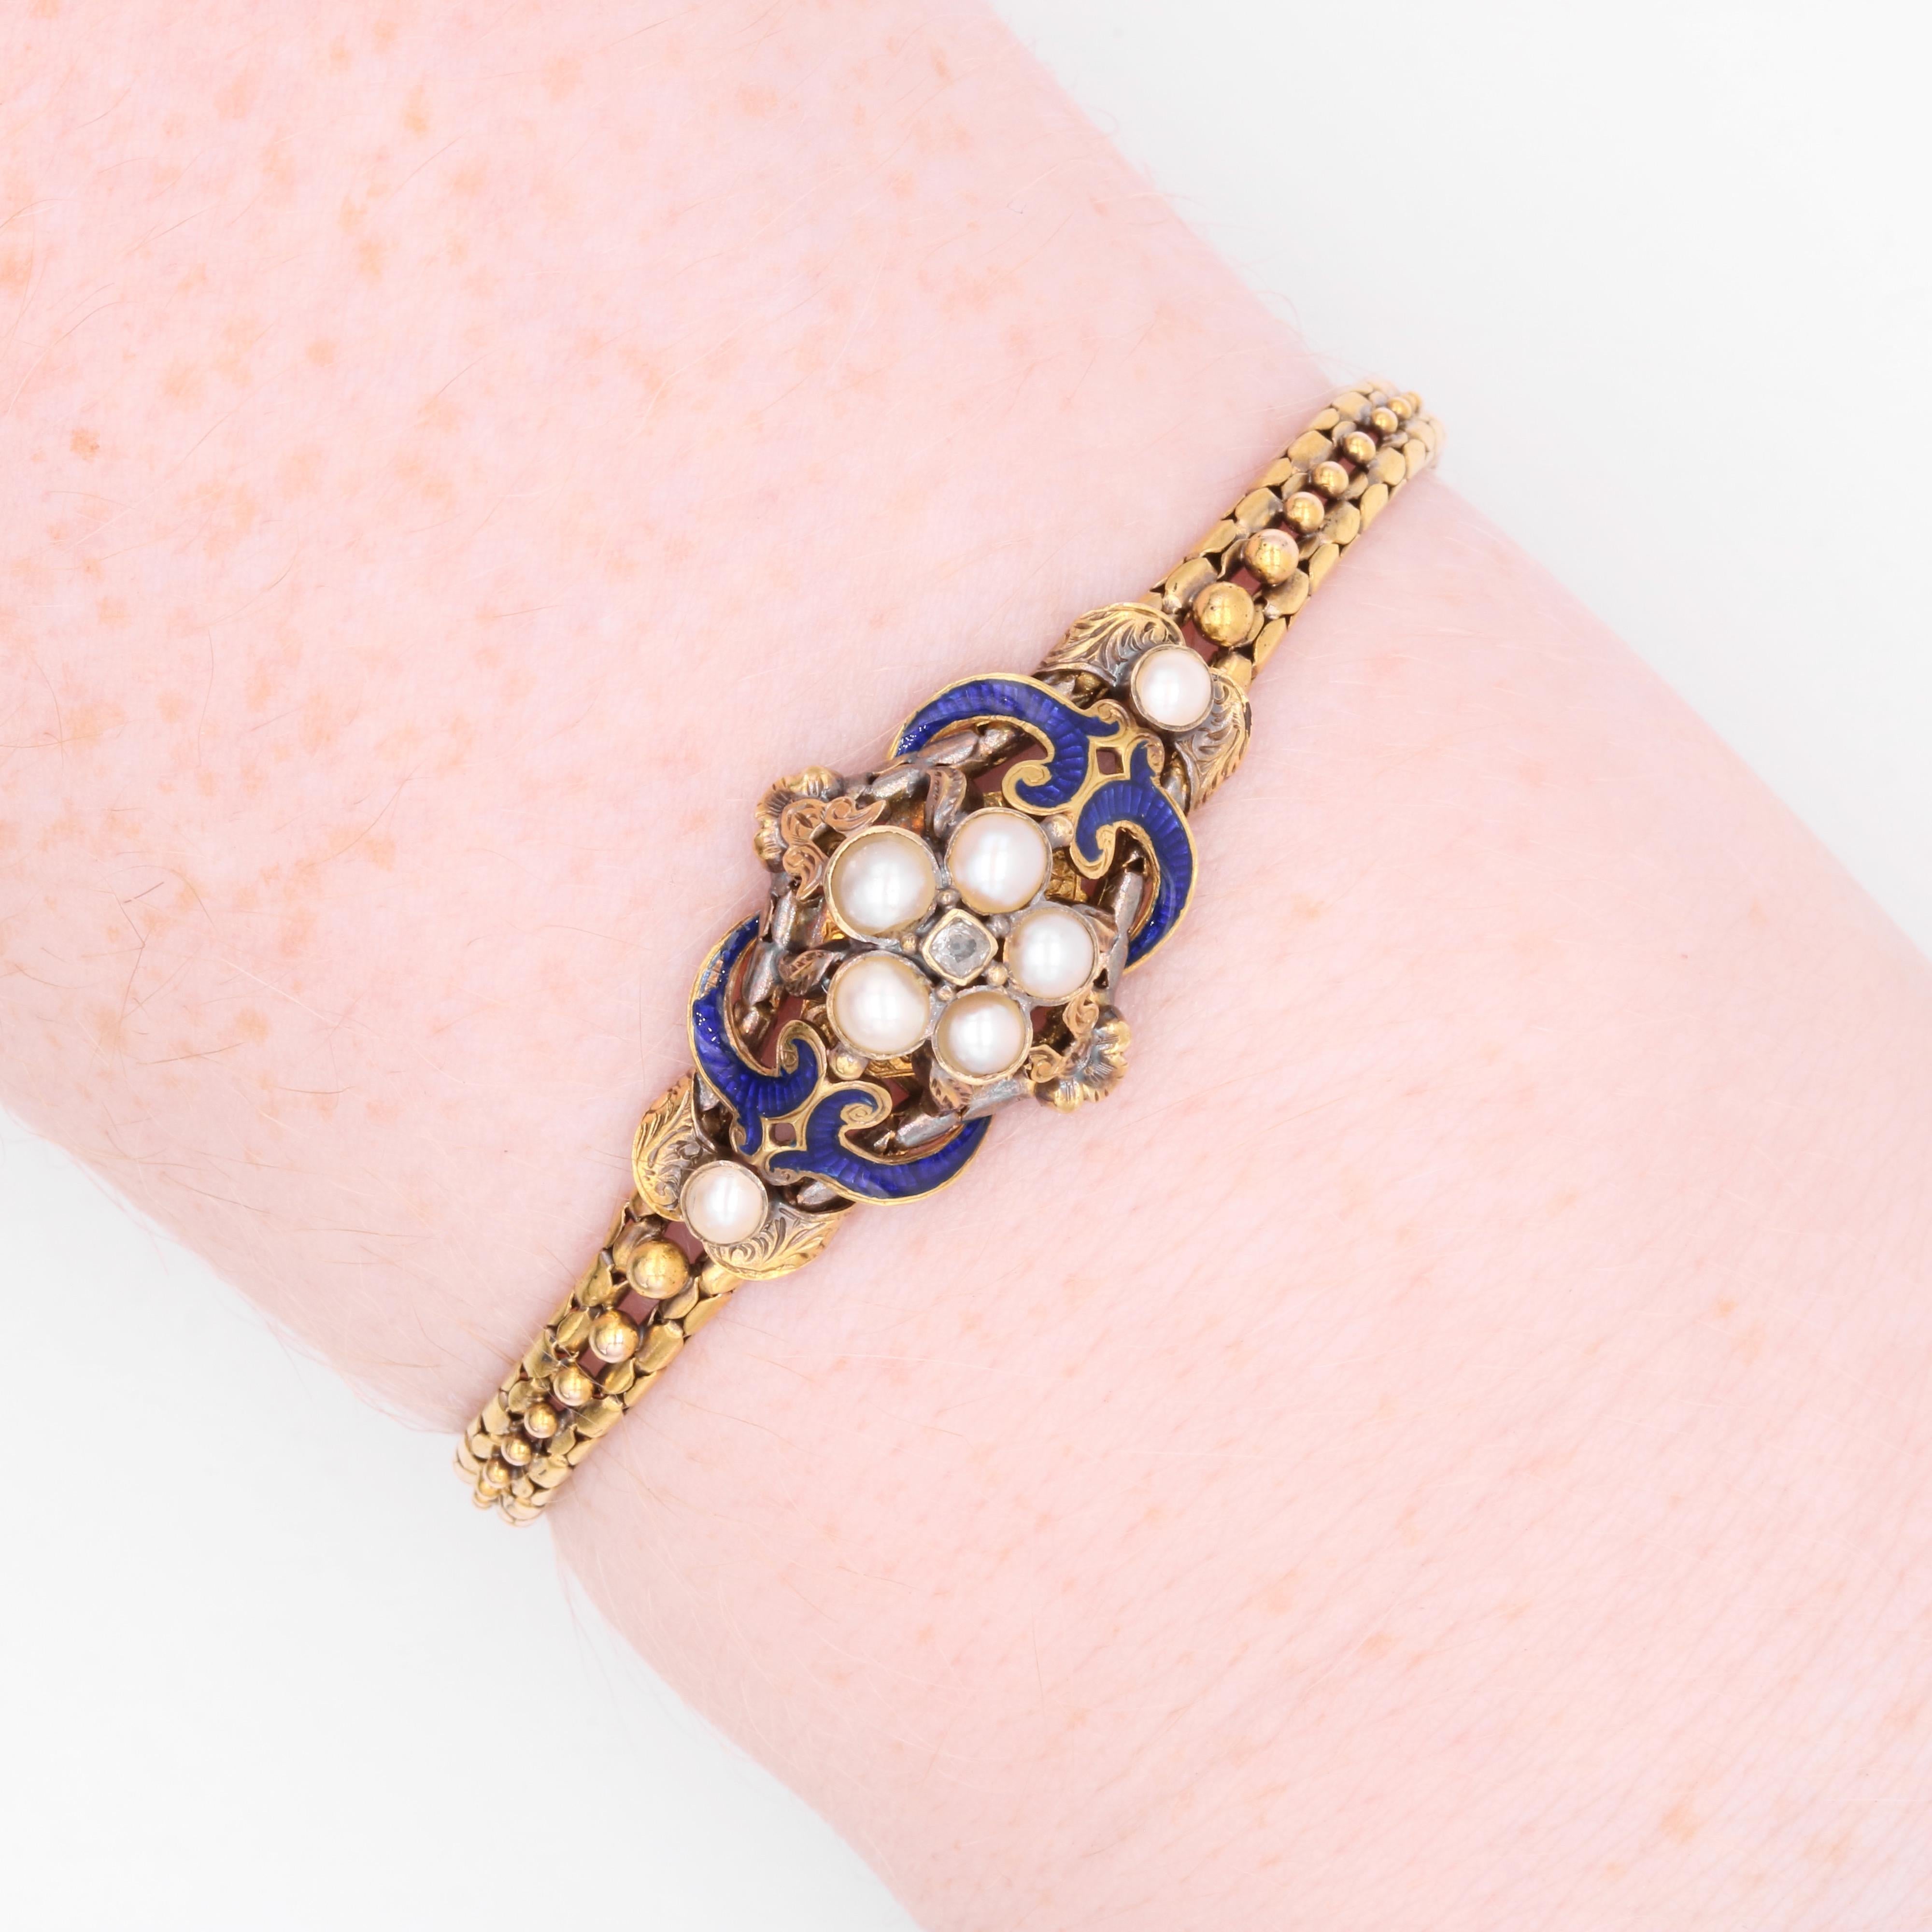 Antique Victorian 18K Gold Diamond, Pearl & Blue Enamel Engraved Bracelet For Sale 5